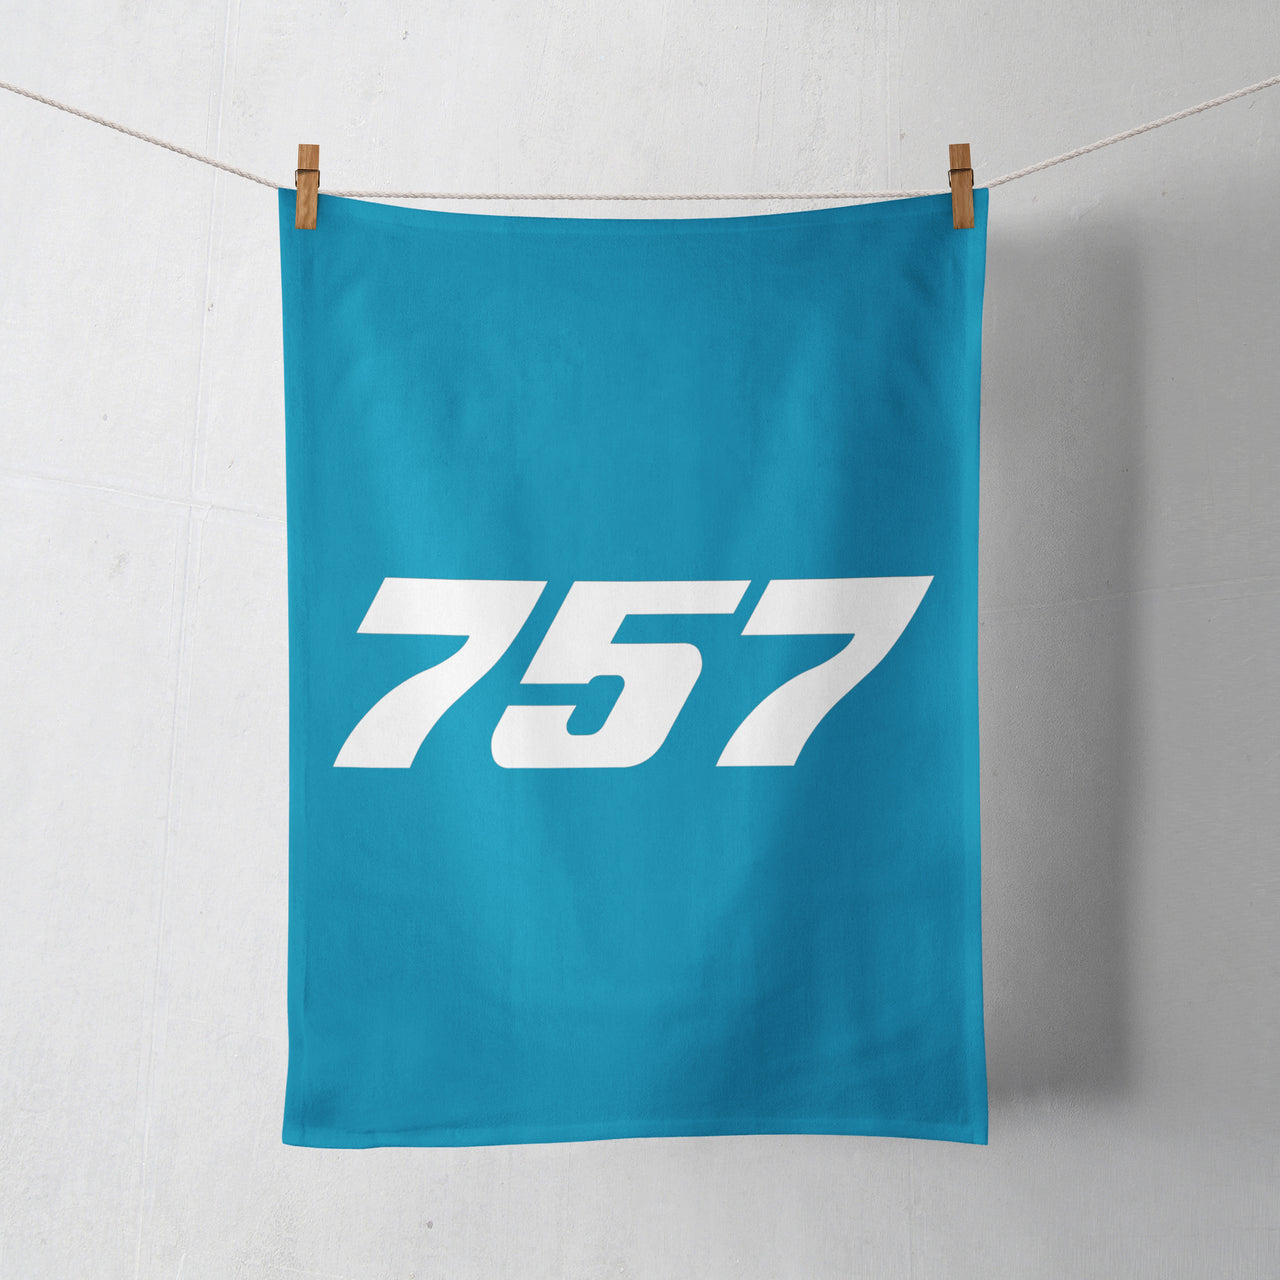 757 Flat Text Designed Towels